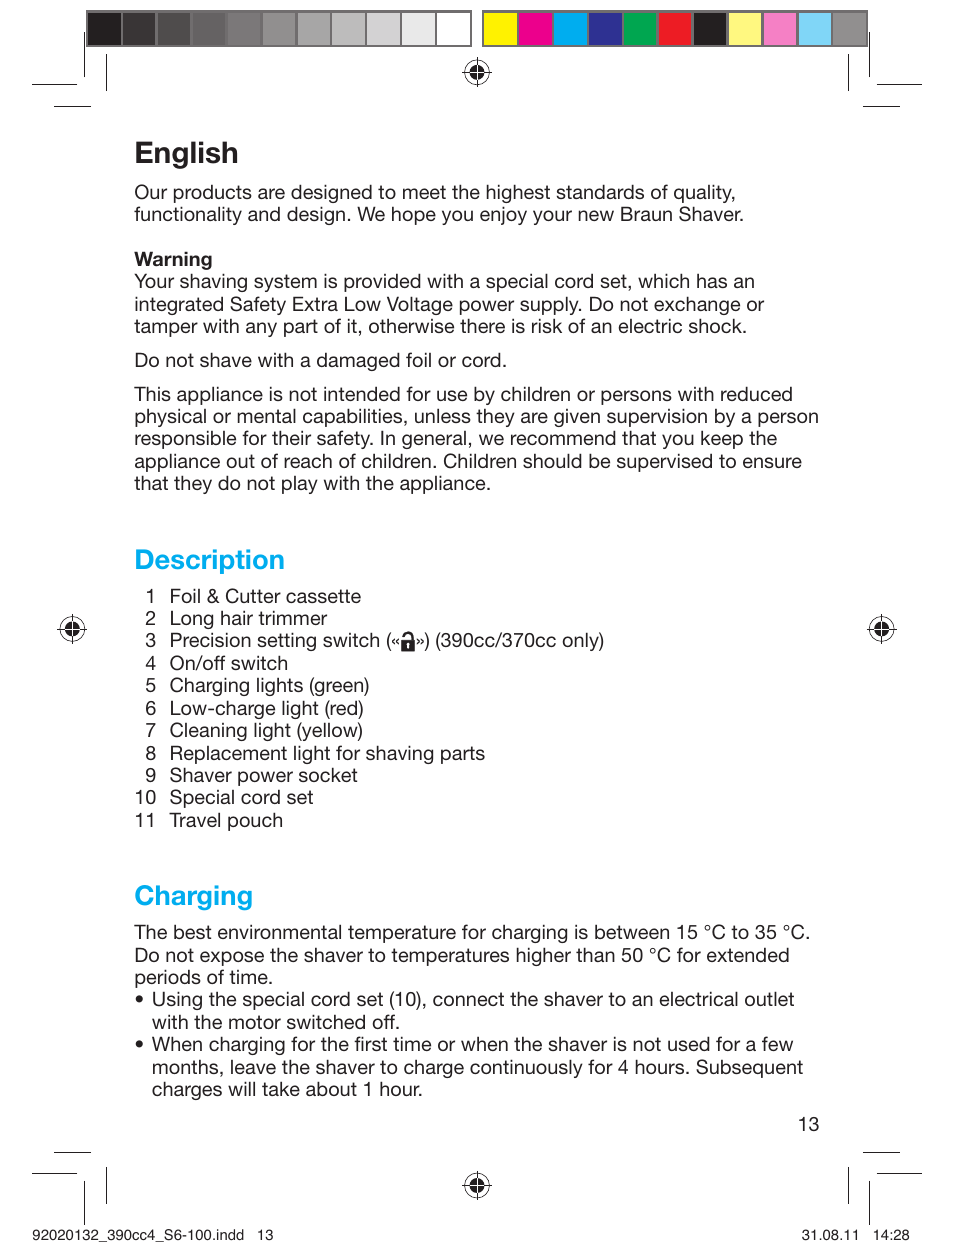 English, Description, Charging | Braun 350cc-4 Series 3 EU User Manual |  Page 13 / 98 | Original mode